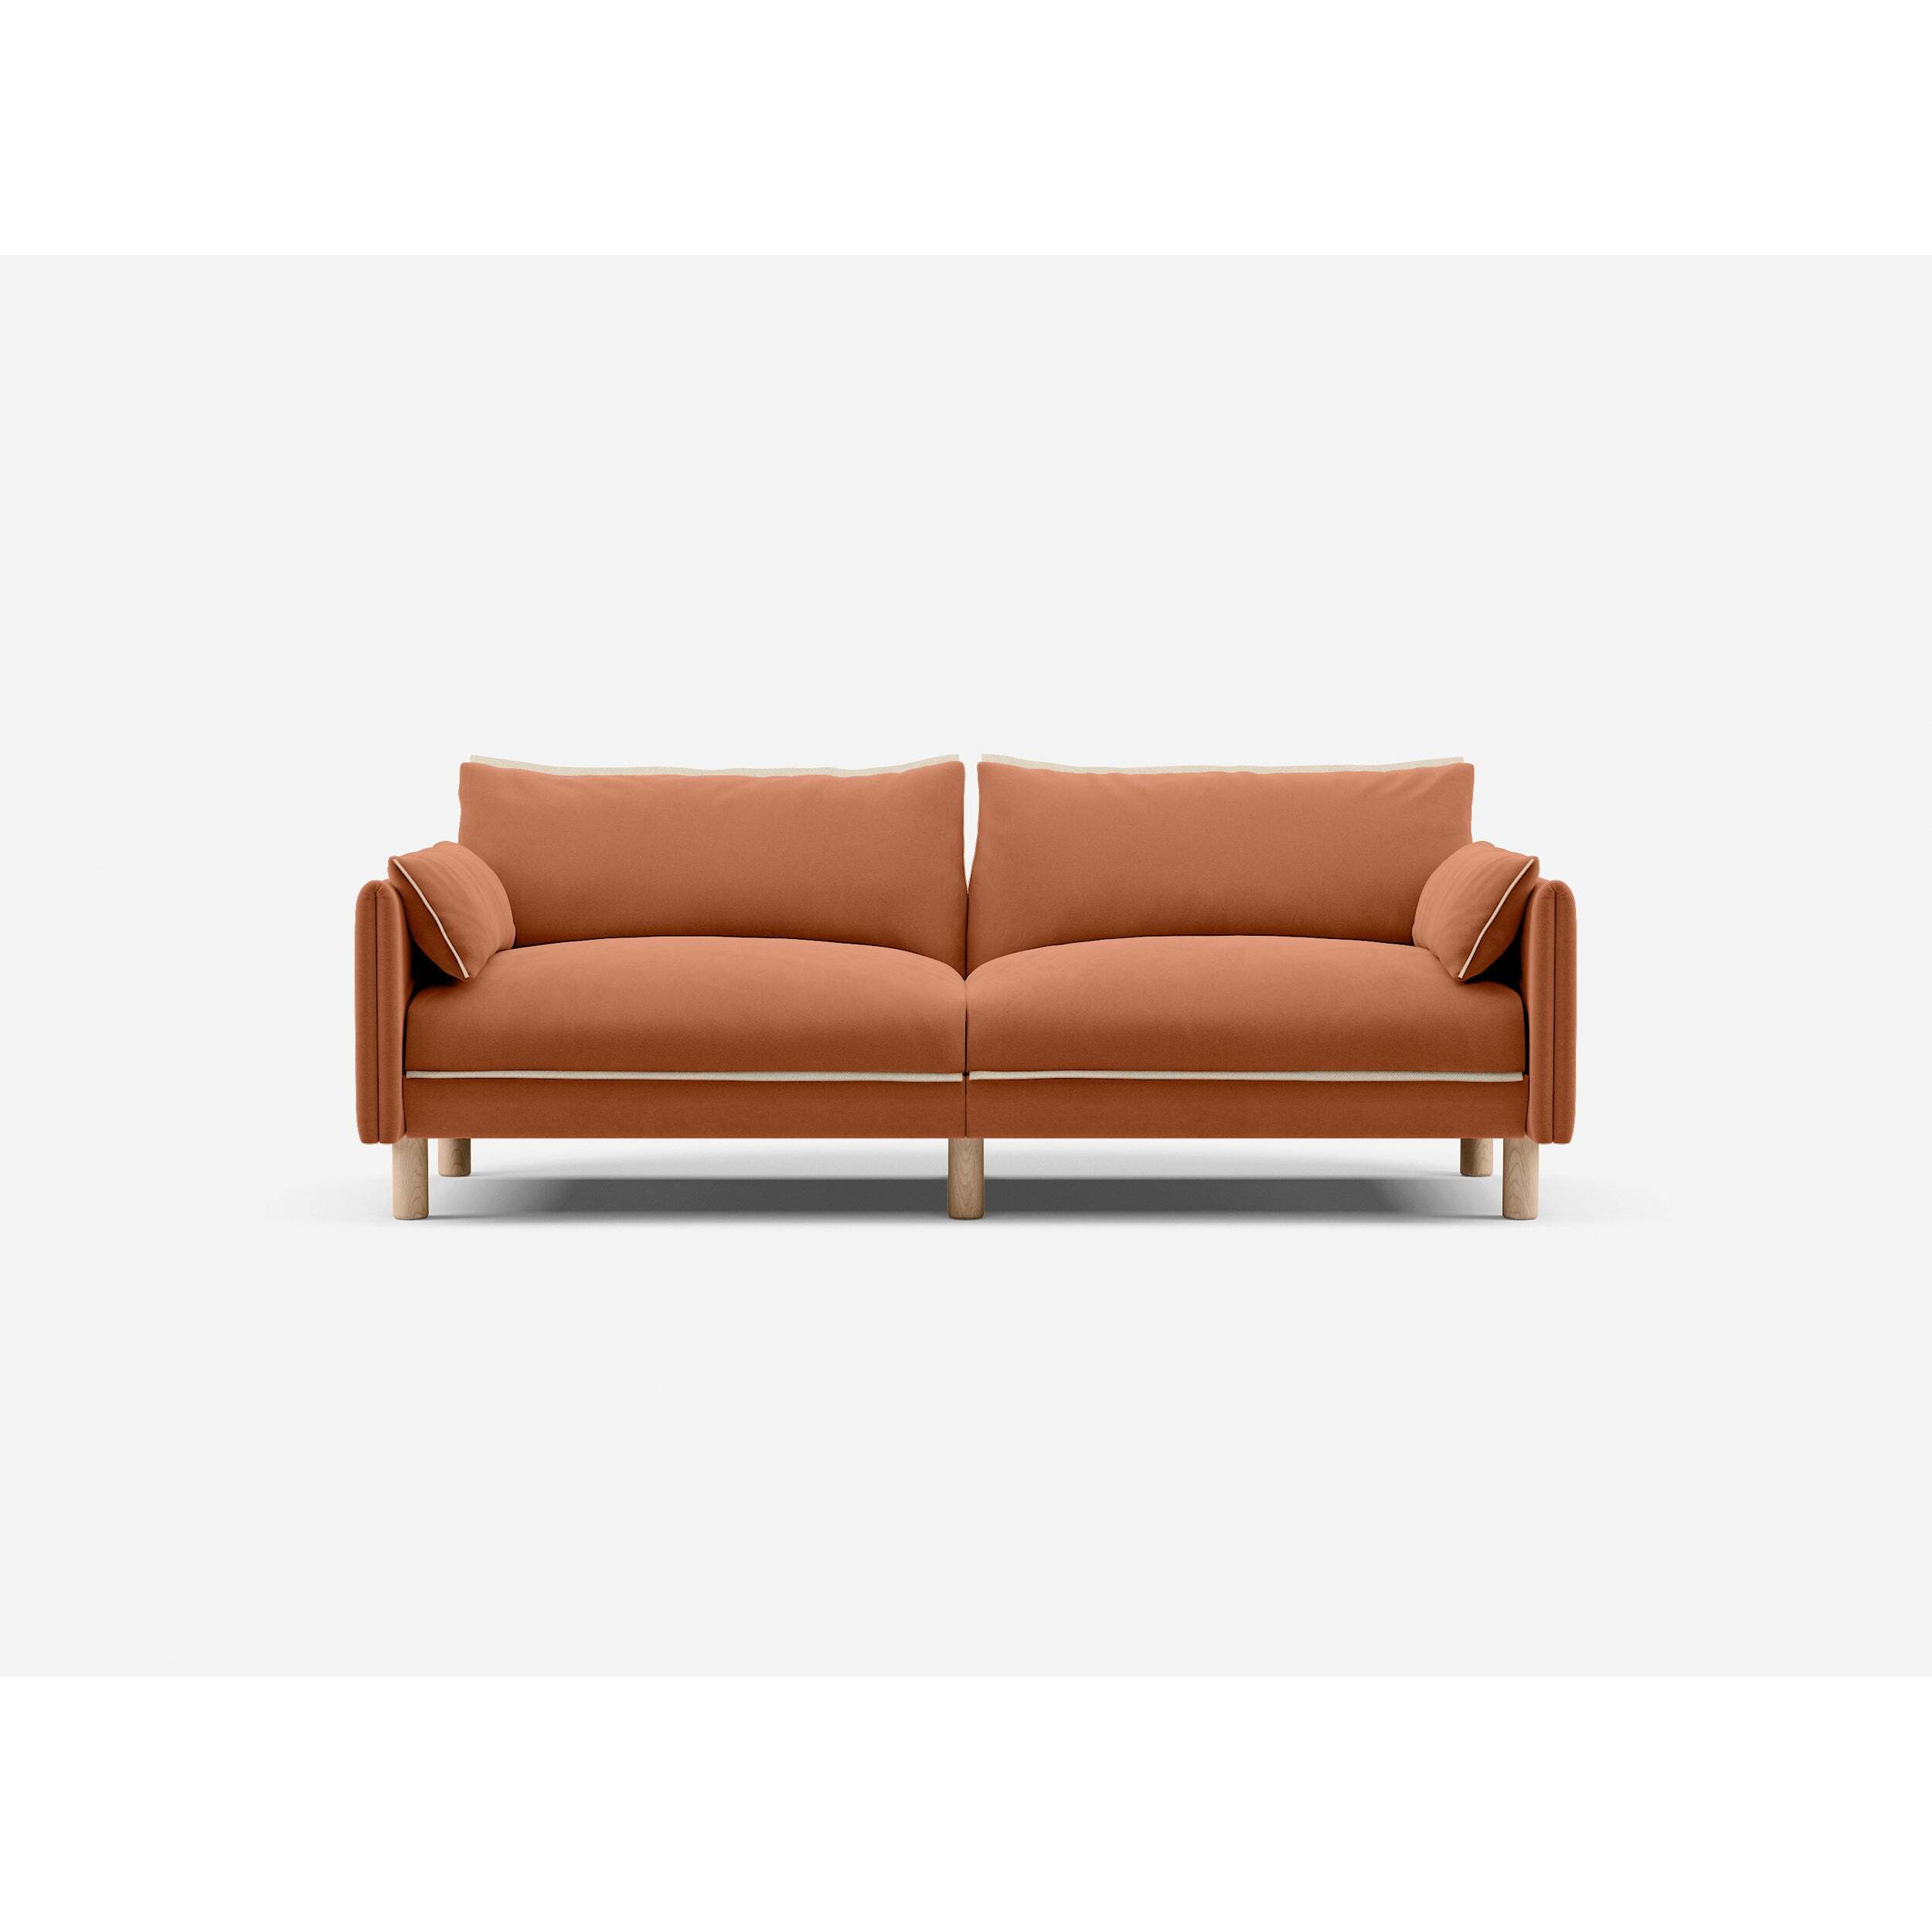 3 Seater Sofa - Henna Cotton - image 1